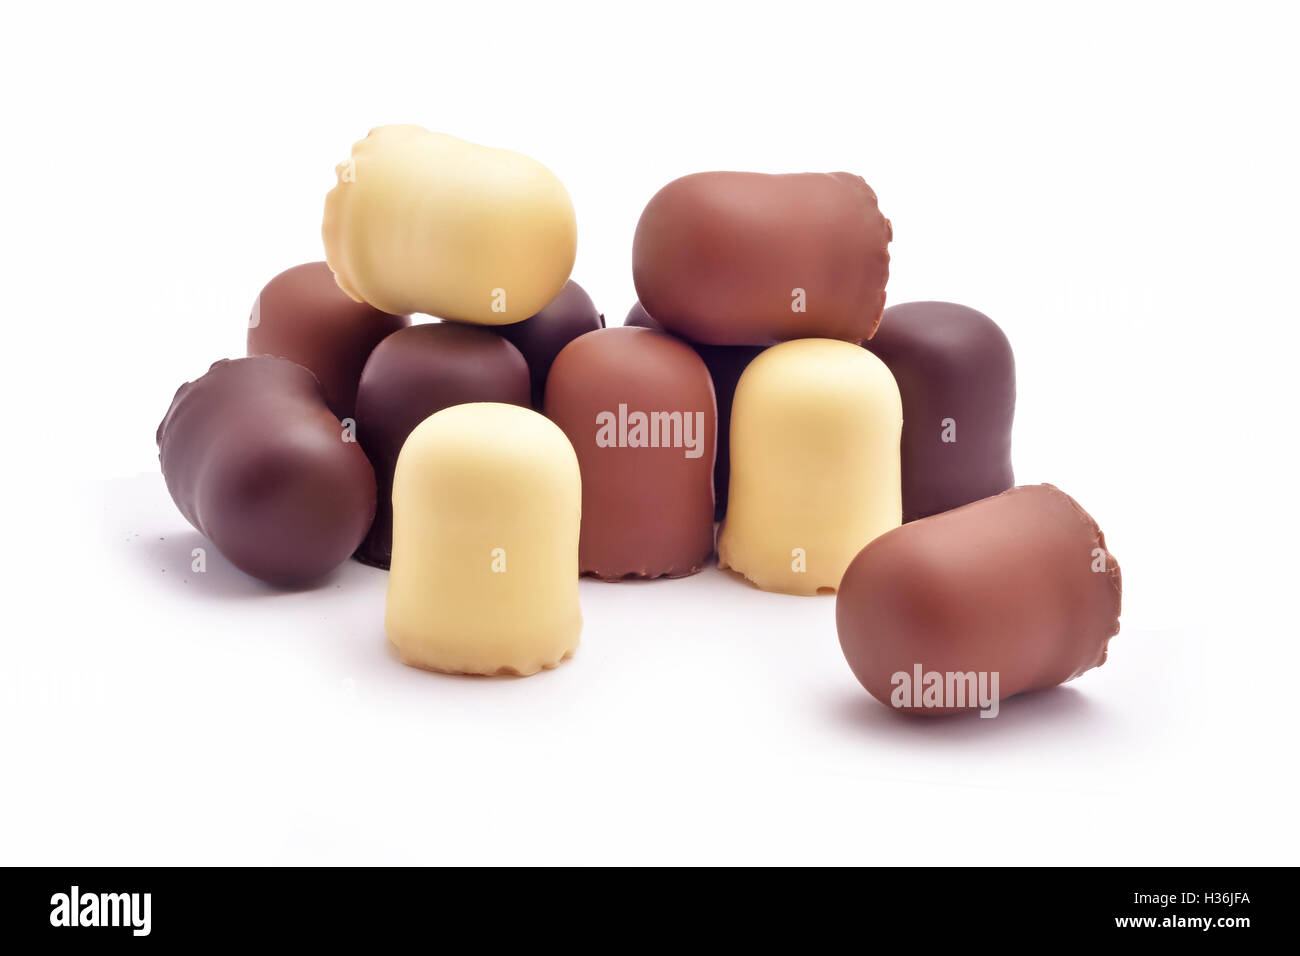 Chocolate coated marshmallow treats isolated Stock Photo